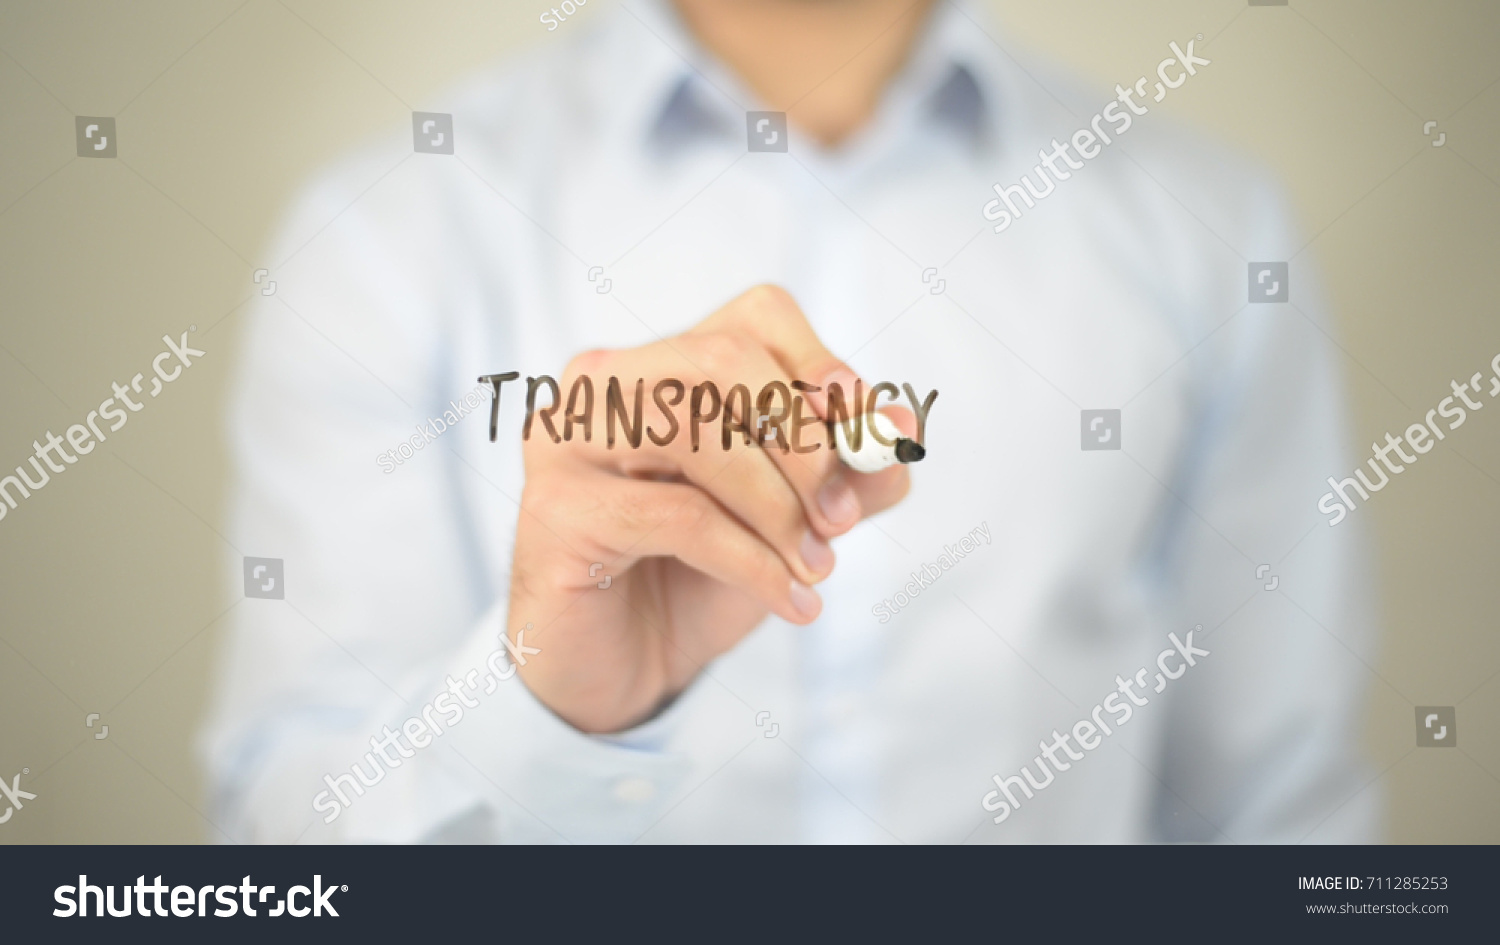 Transparency,  Man writing on transparent screen #711285253